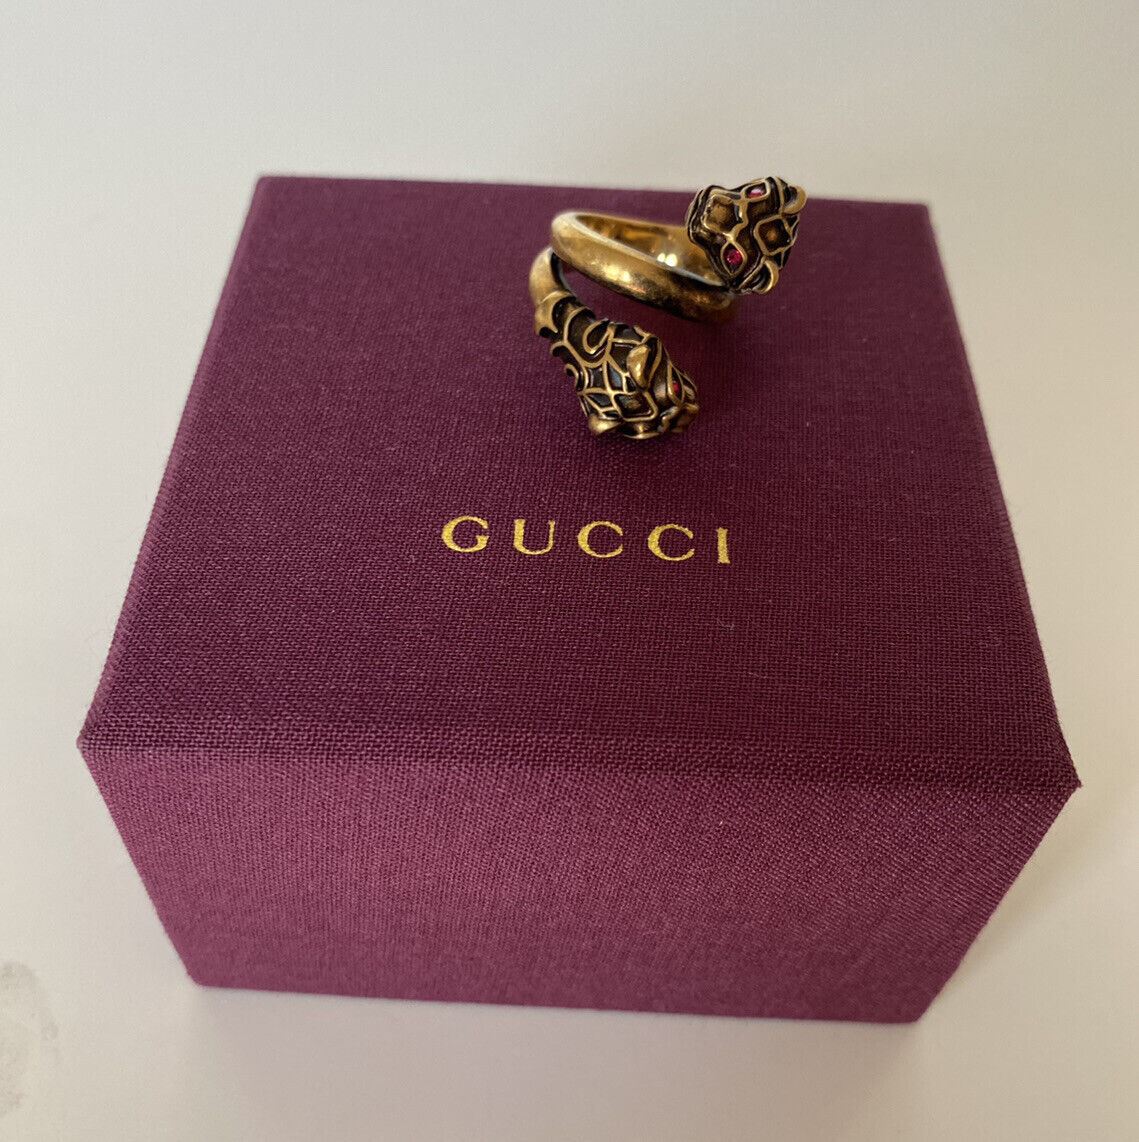 NWB Authentic GUCCI Кольцо Gucci с красными кристаллами и головой тигра, размер 13 (16,8 мм), Италия